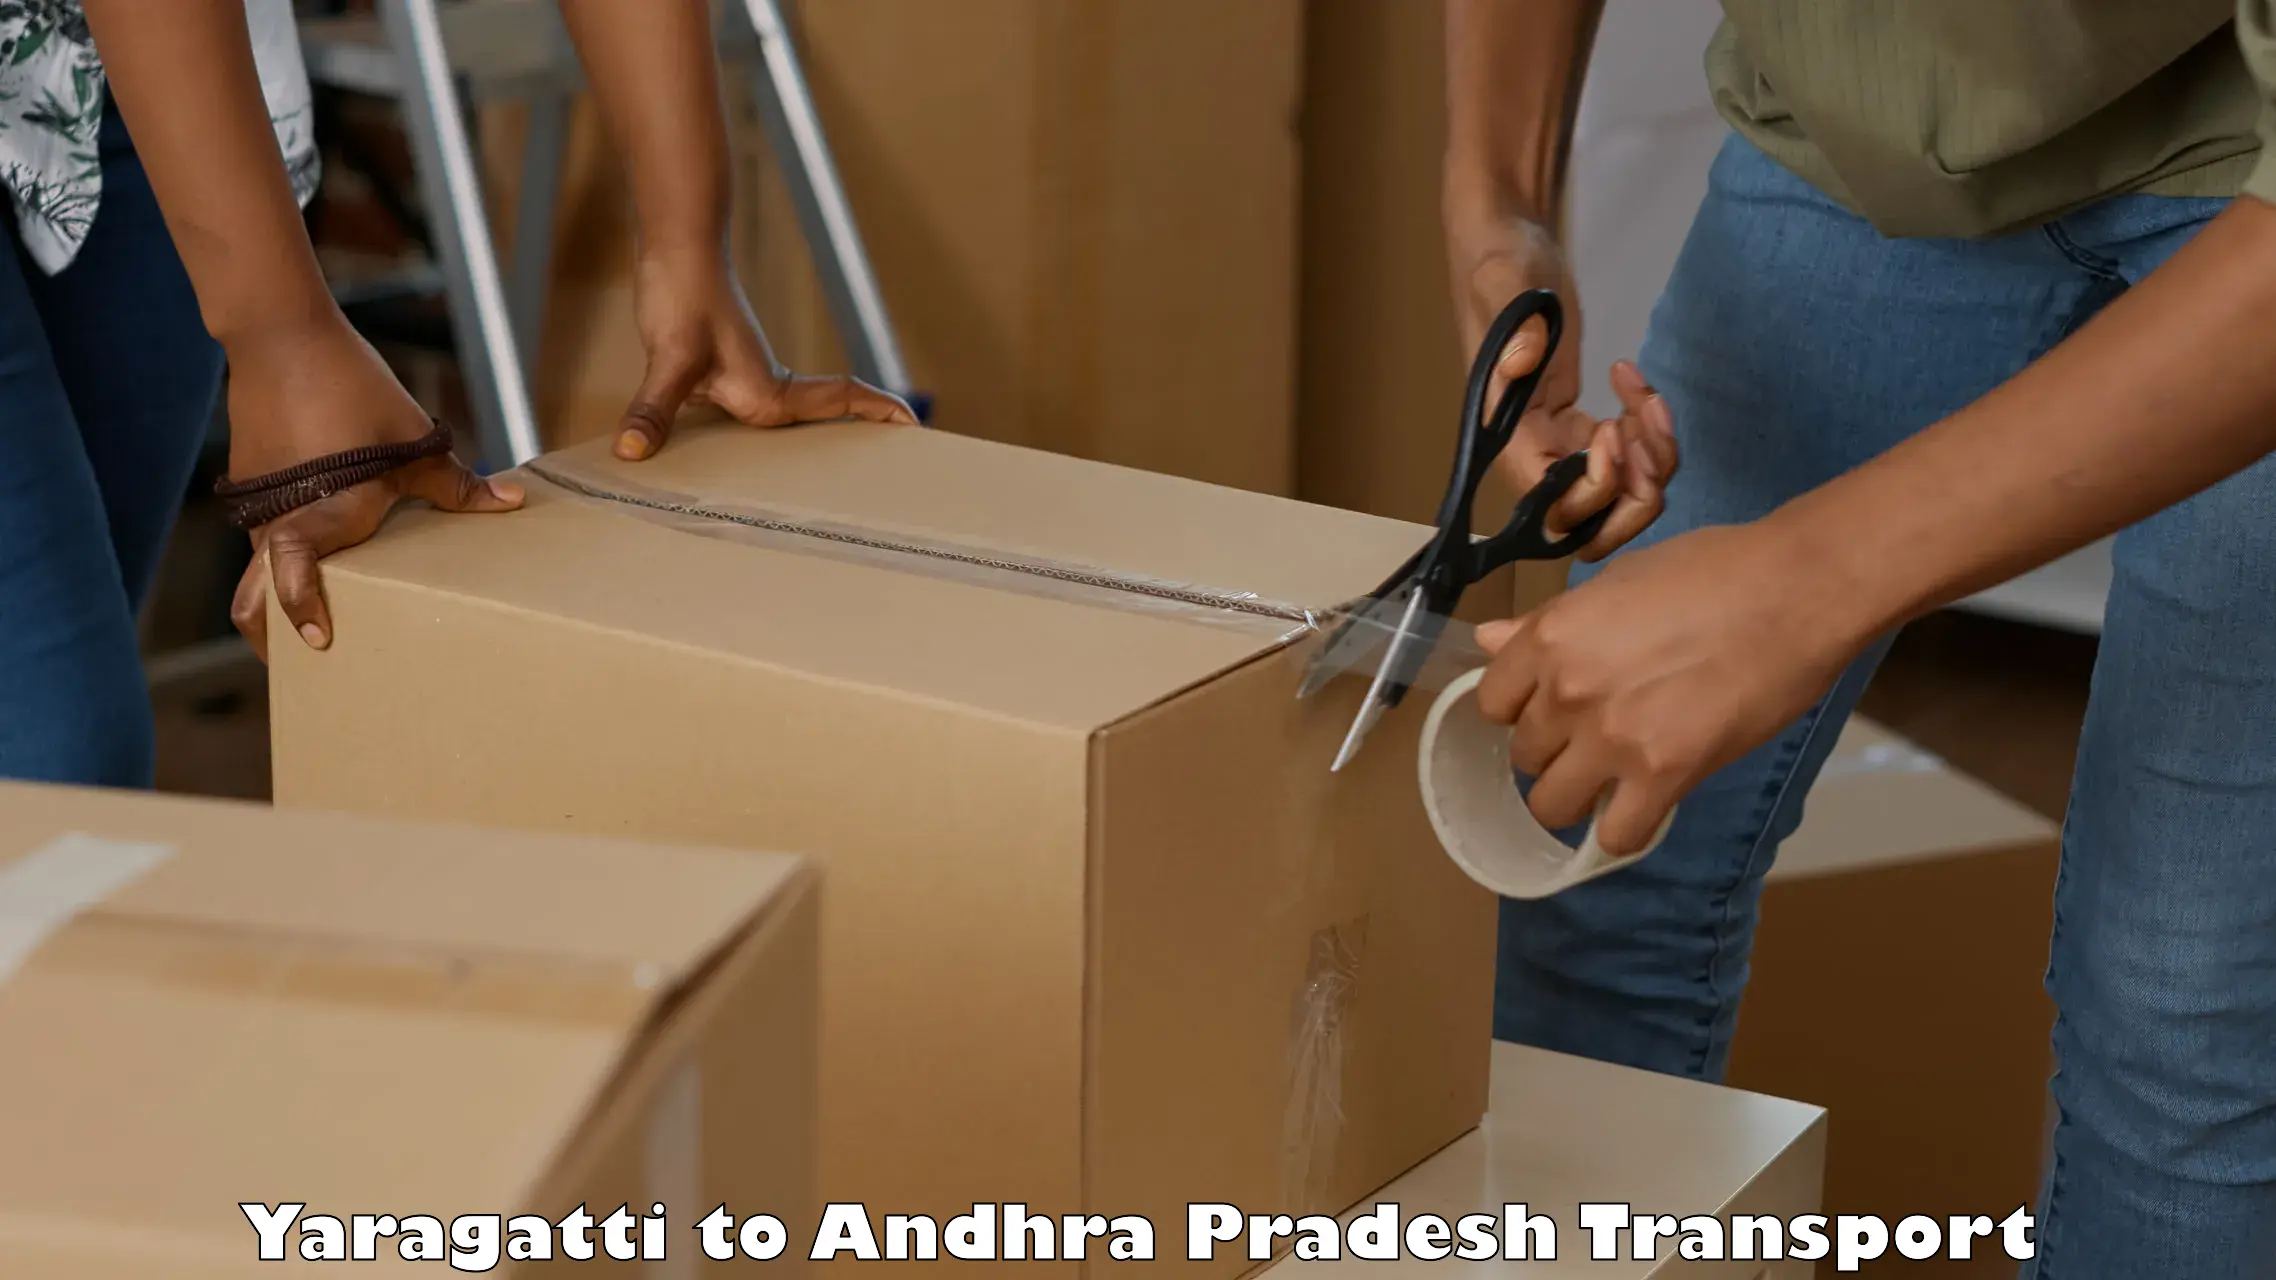 Truck transport companies in India Yaragatti to Andhra Pradesh